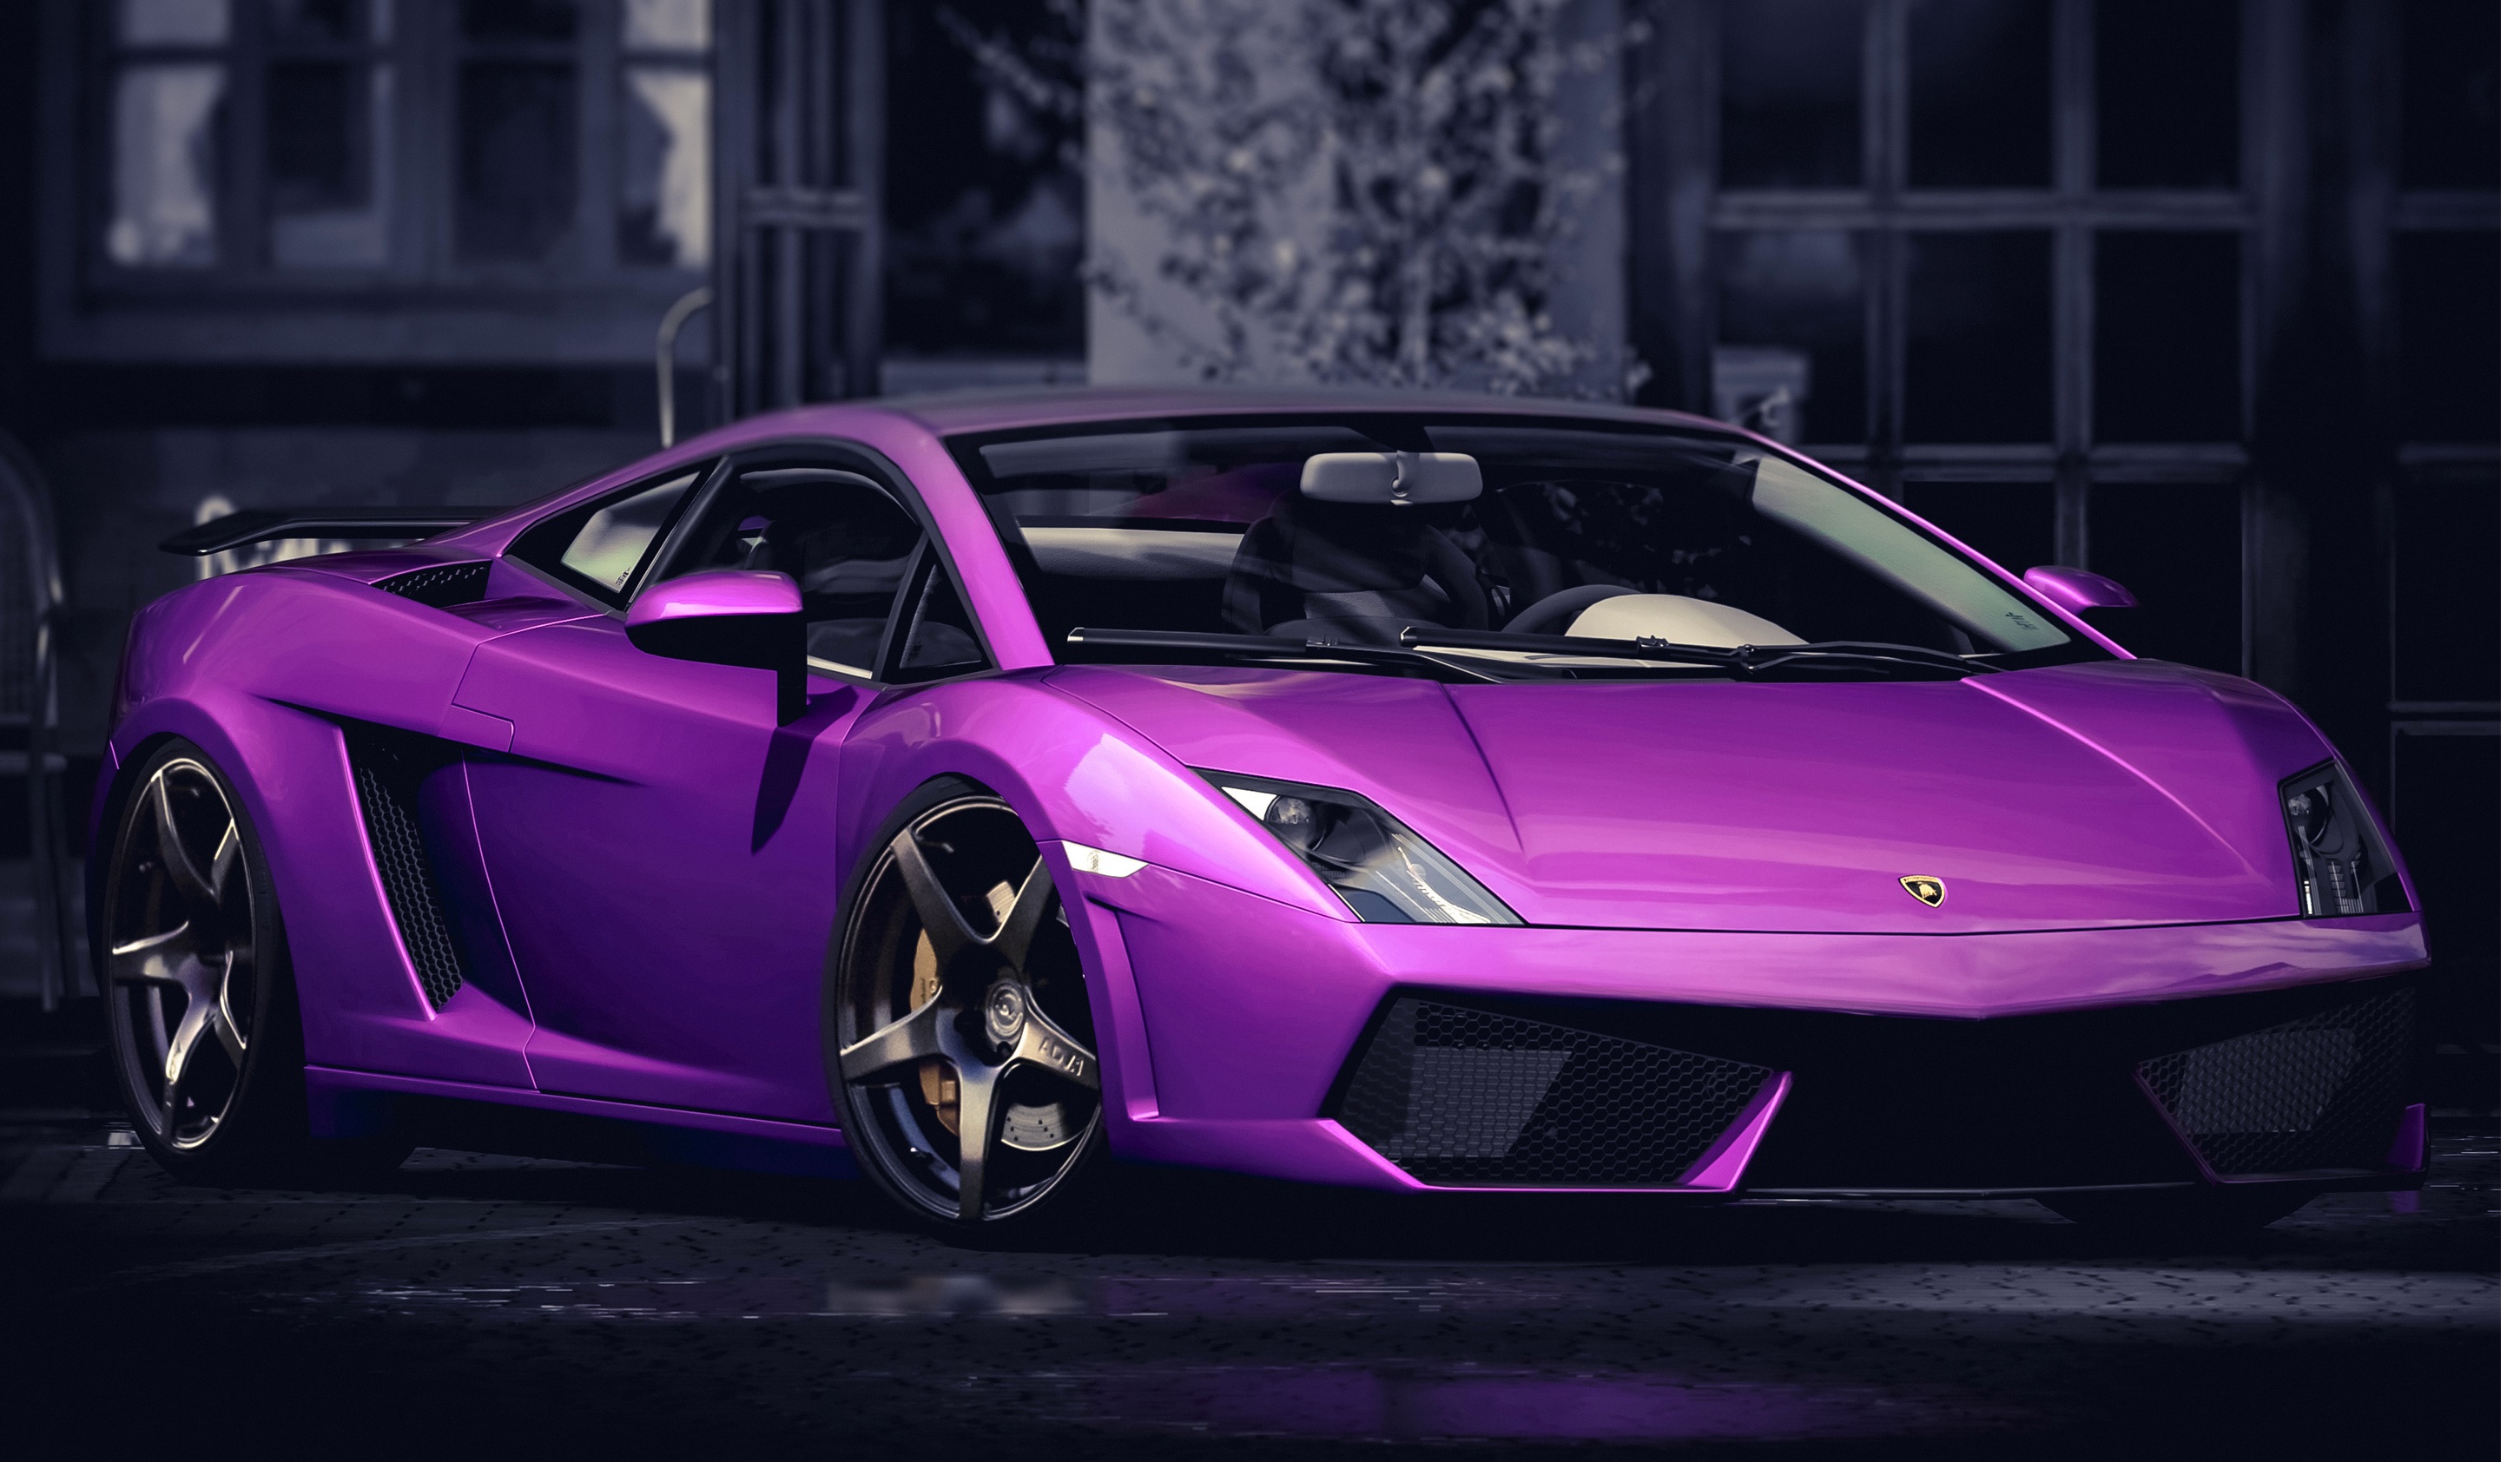 Purple Lamborghini Wallpaper Image Photos Pictures Background